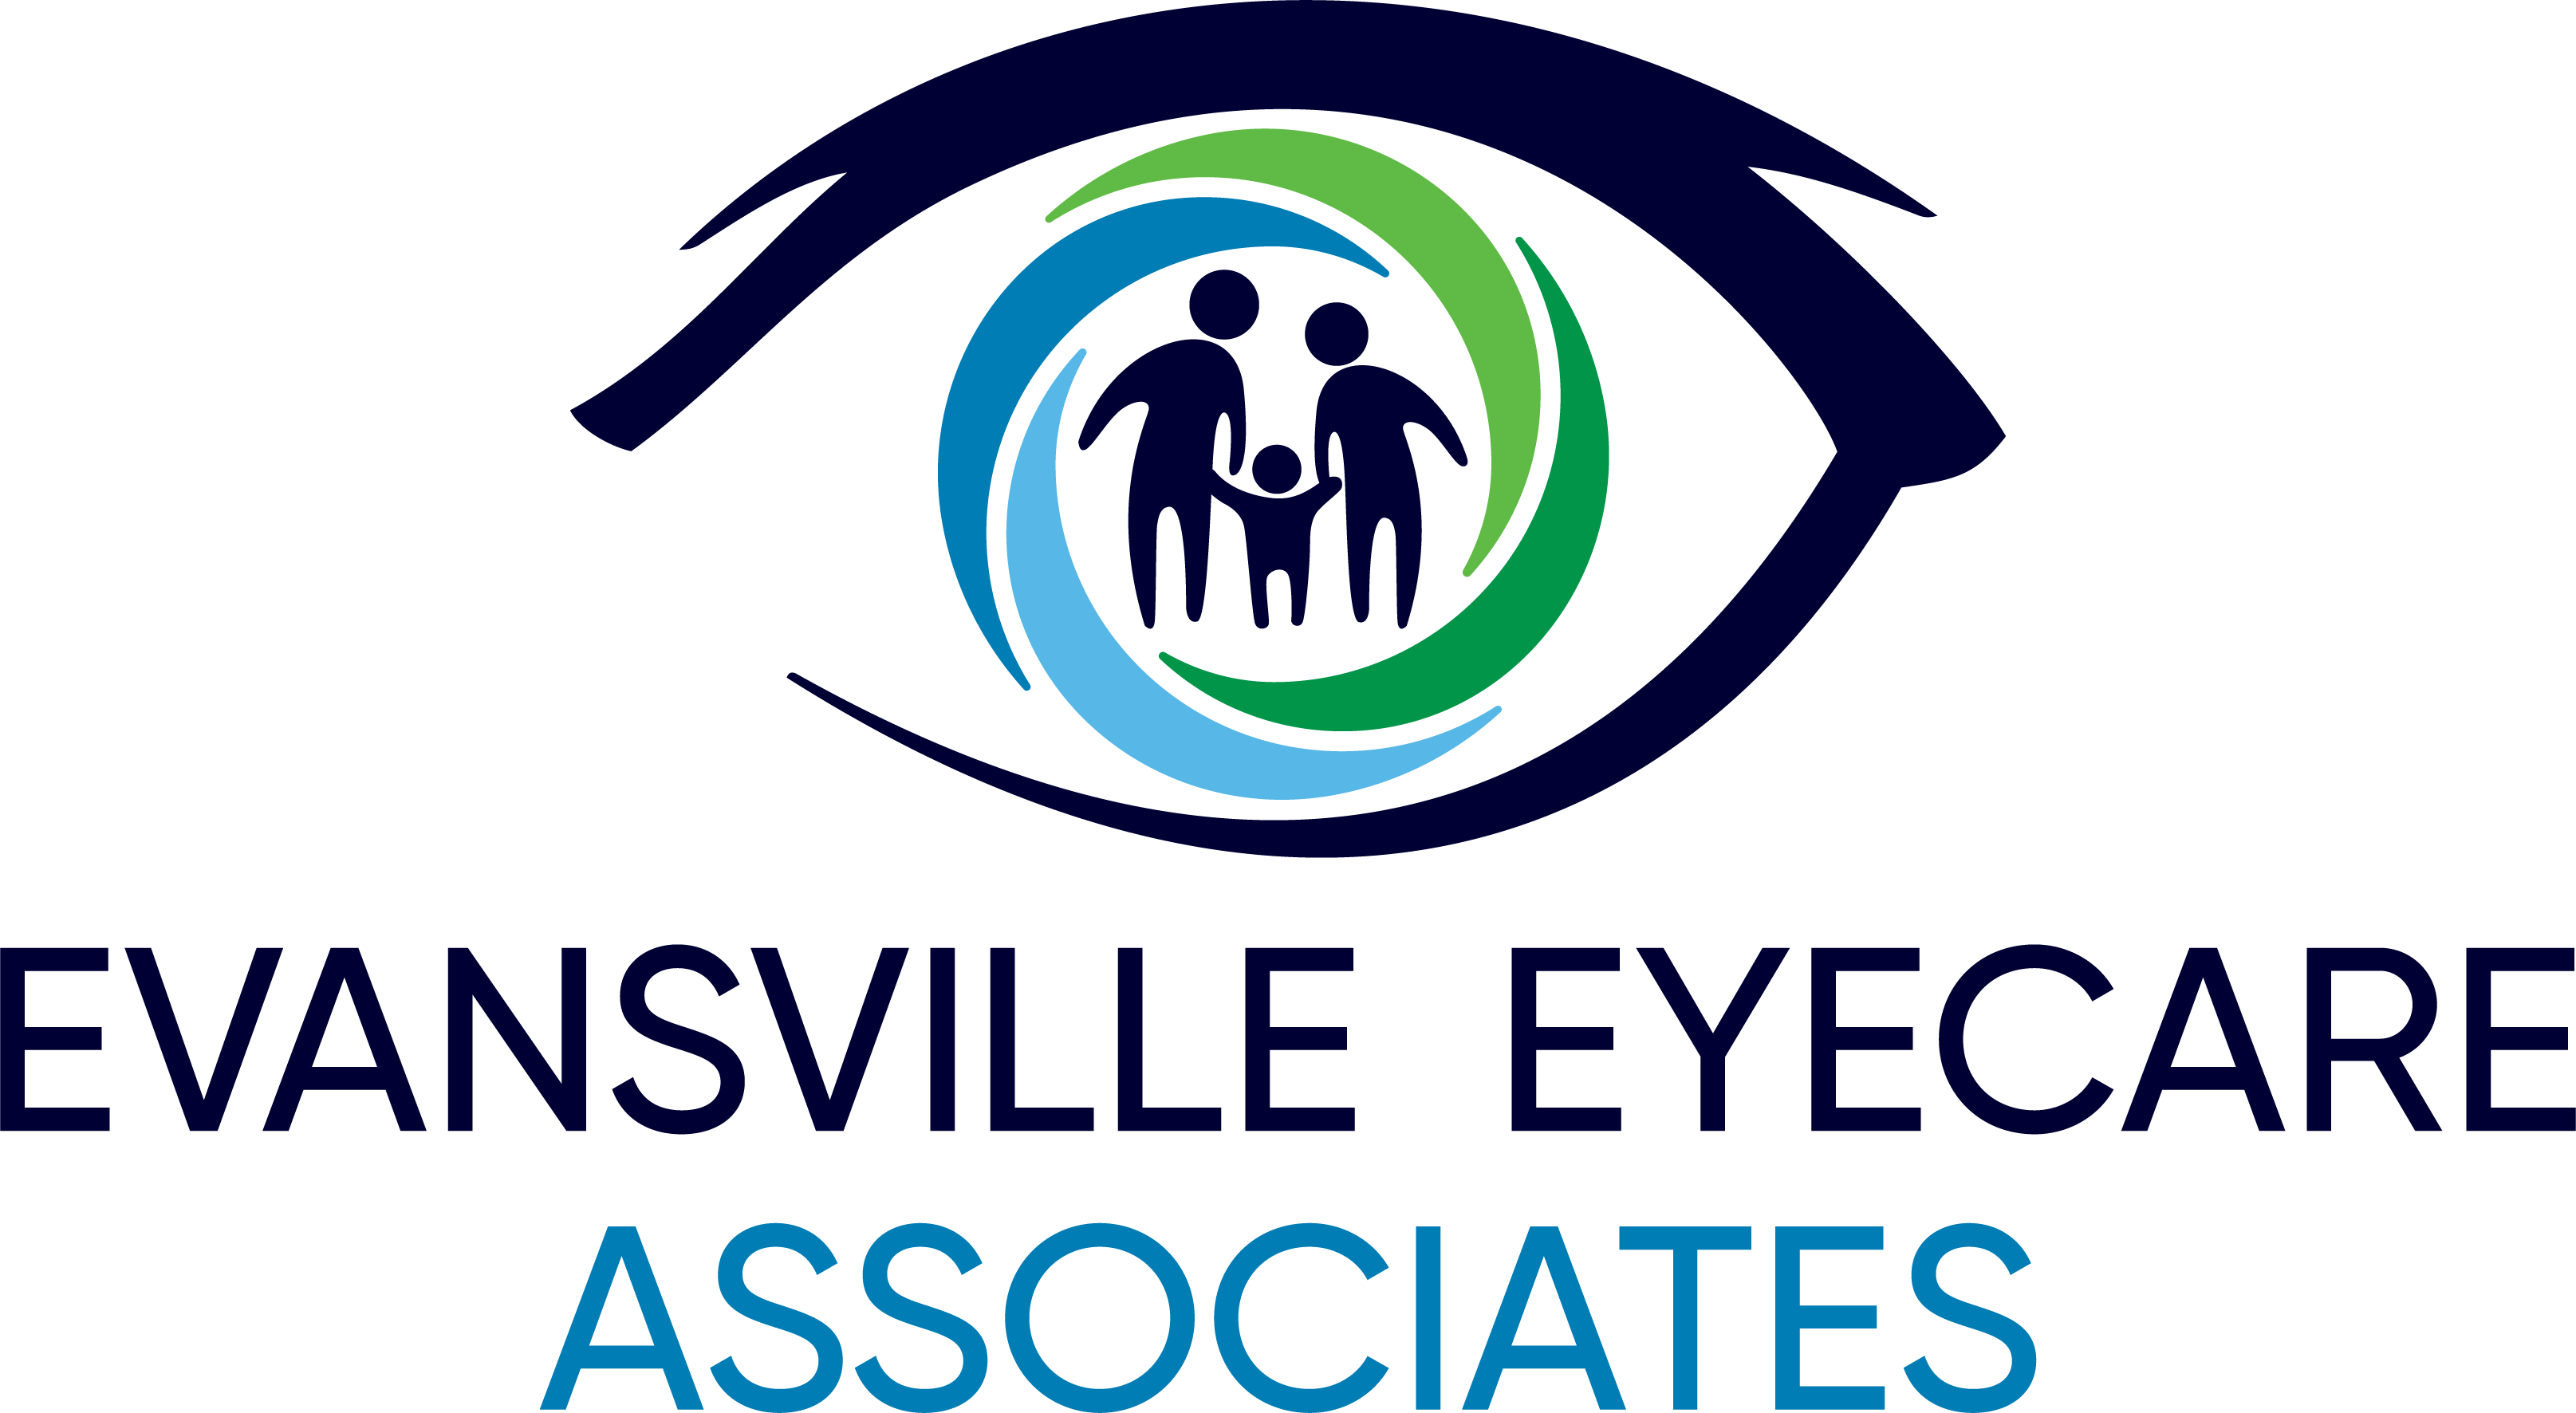 Evansville Eyecare Associates